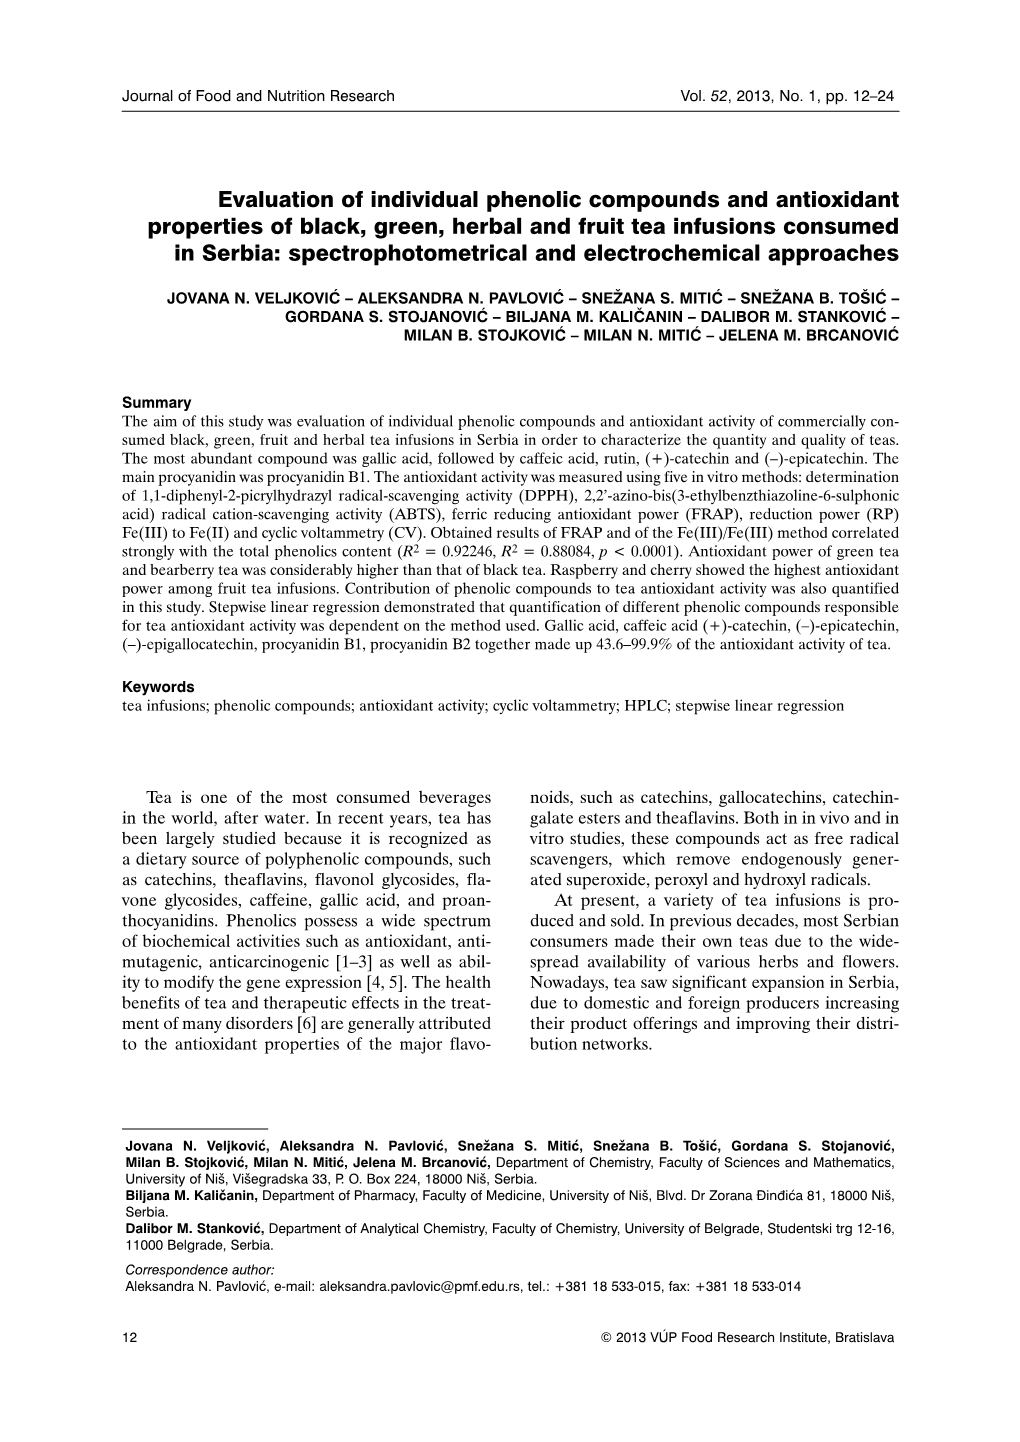 Evaluation of Individual Phenolic Compounds and Antioxidant